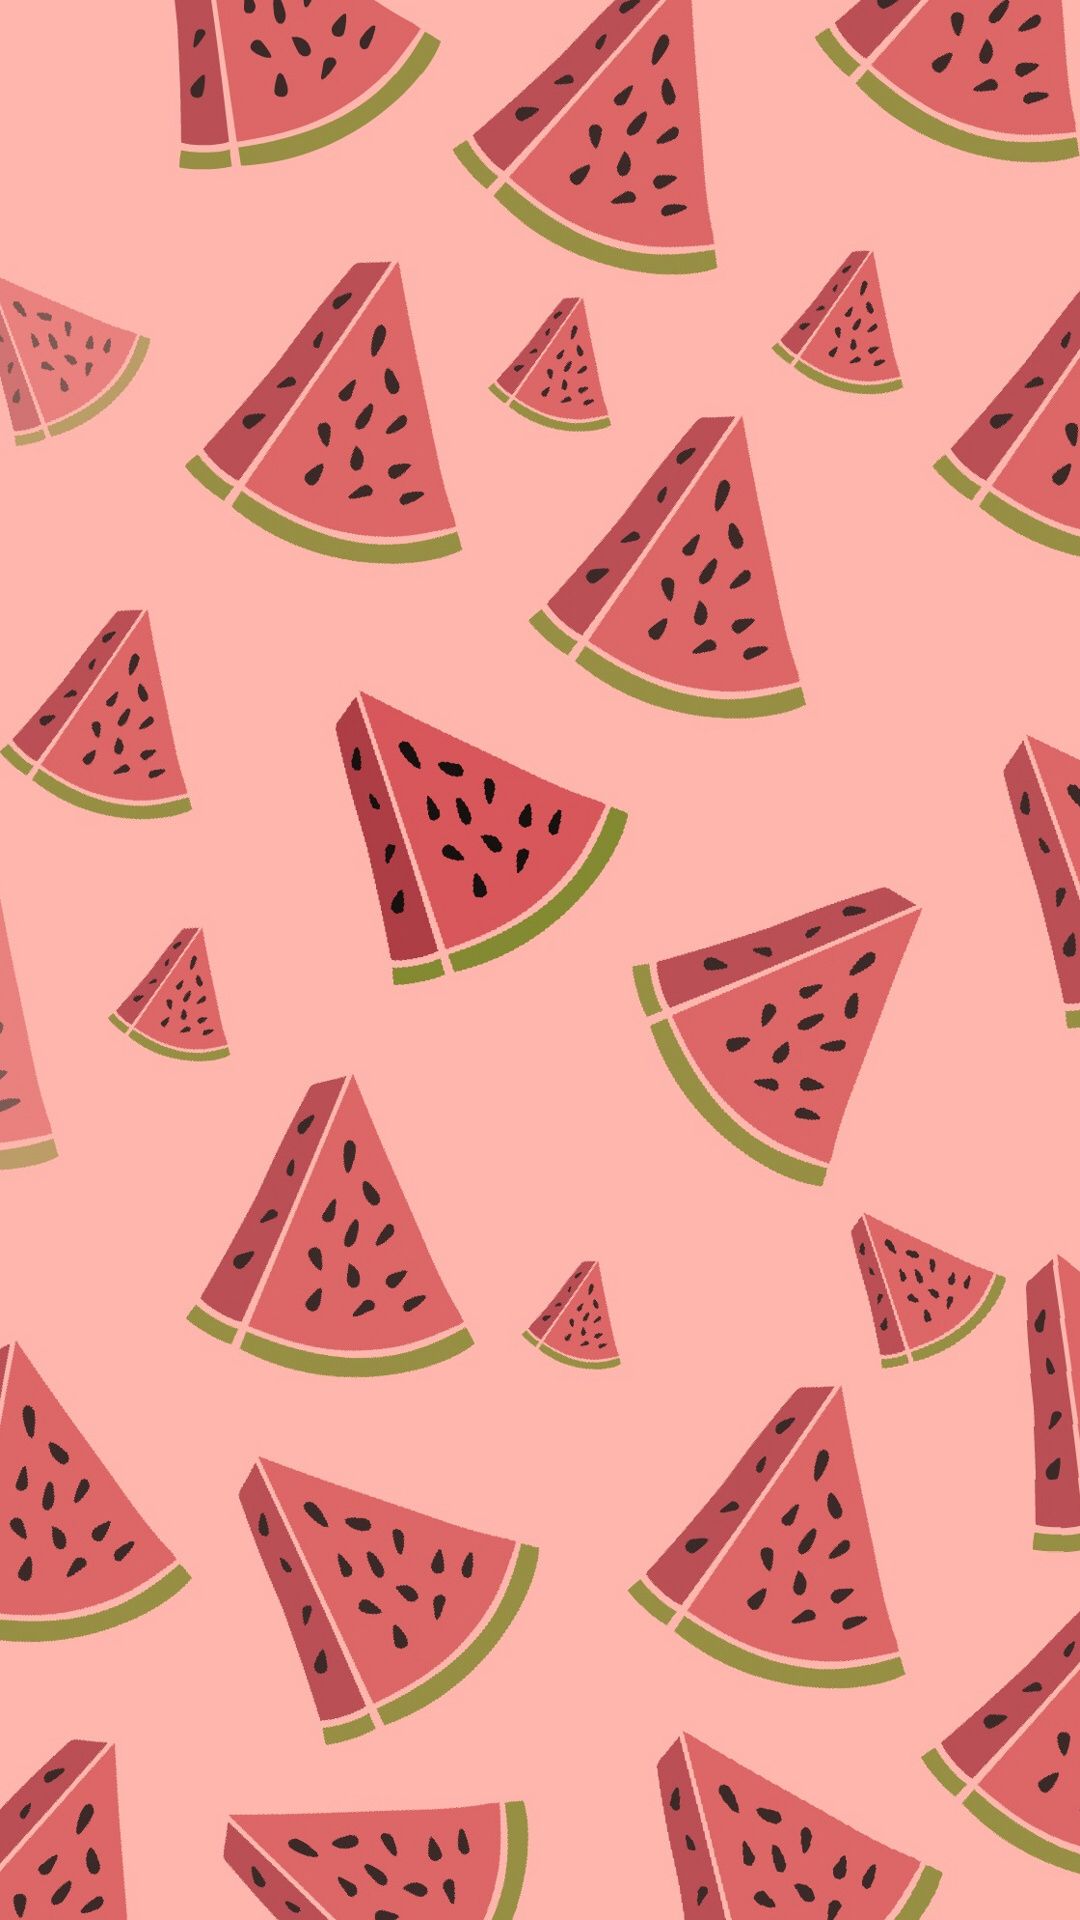 Watermelon mainia. Watermelon wallpaper, Wallpaper iphone summer, Cute patterns wallpaper